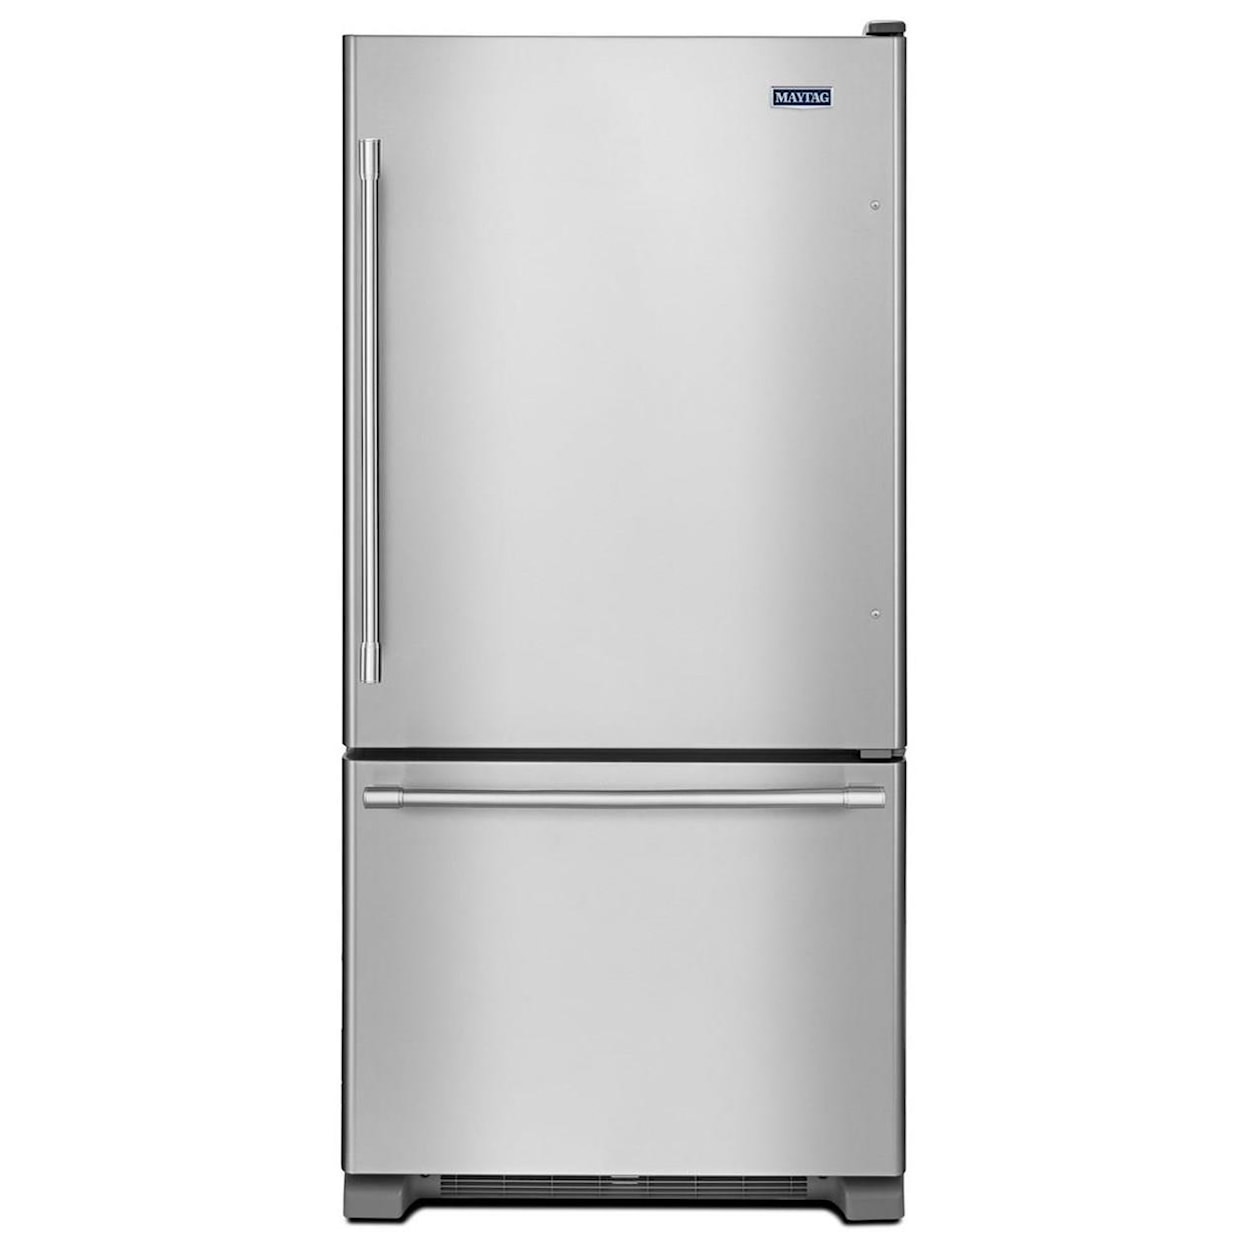 Maytag Bottom Freezer Refrigerators - Maytag 33-Inch 22 Cu. Ft. Bottom Mount Refrigerator